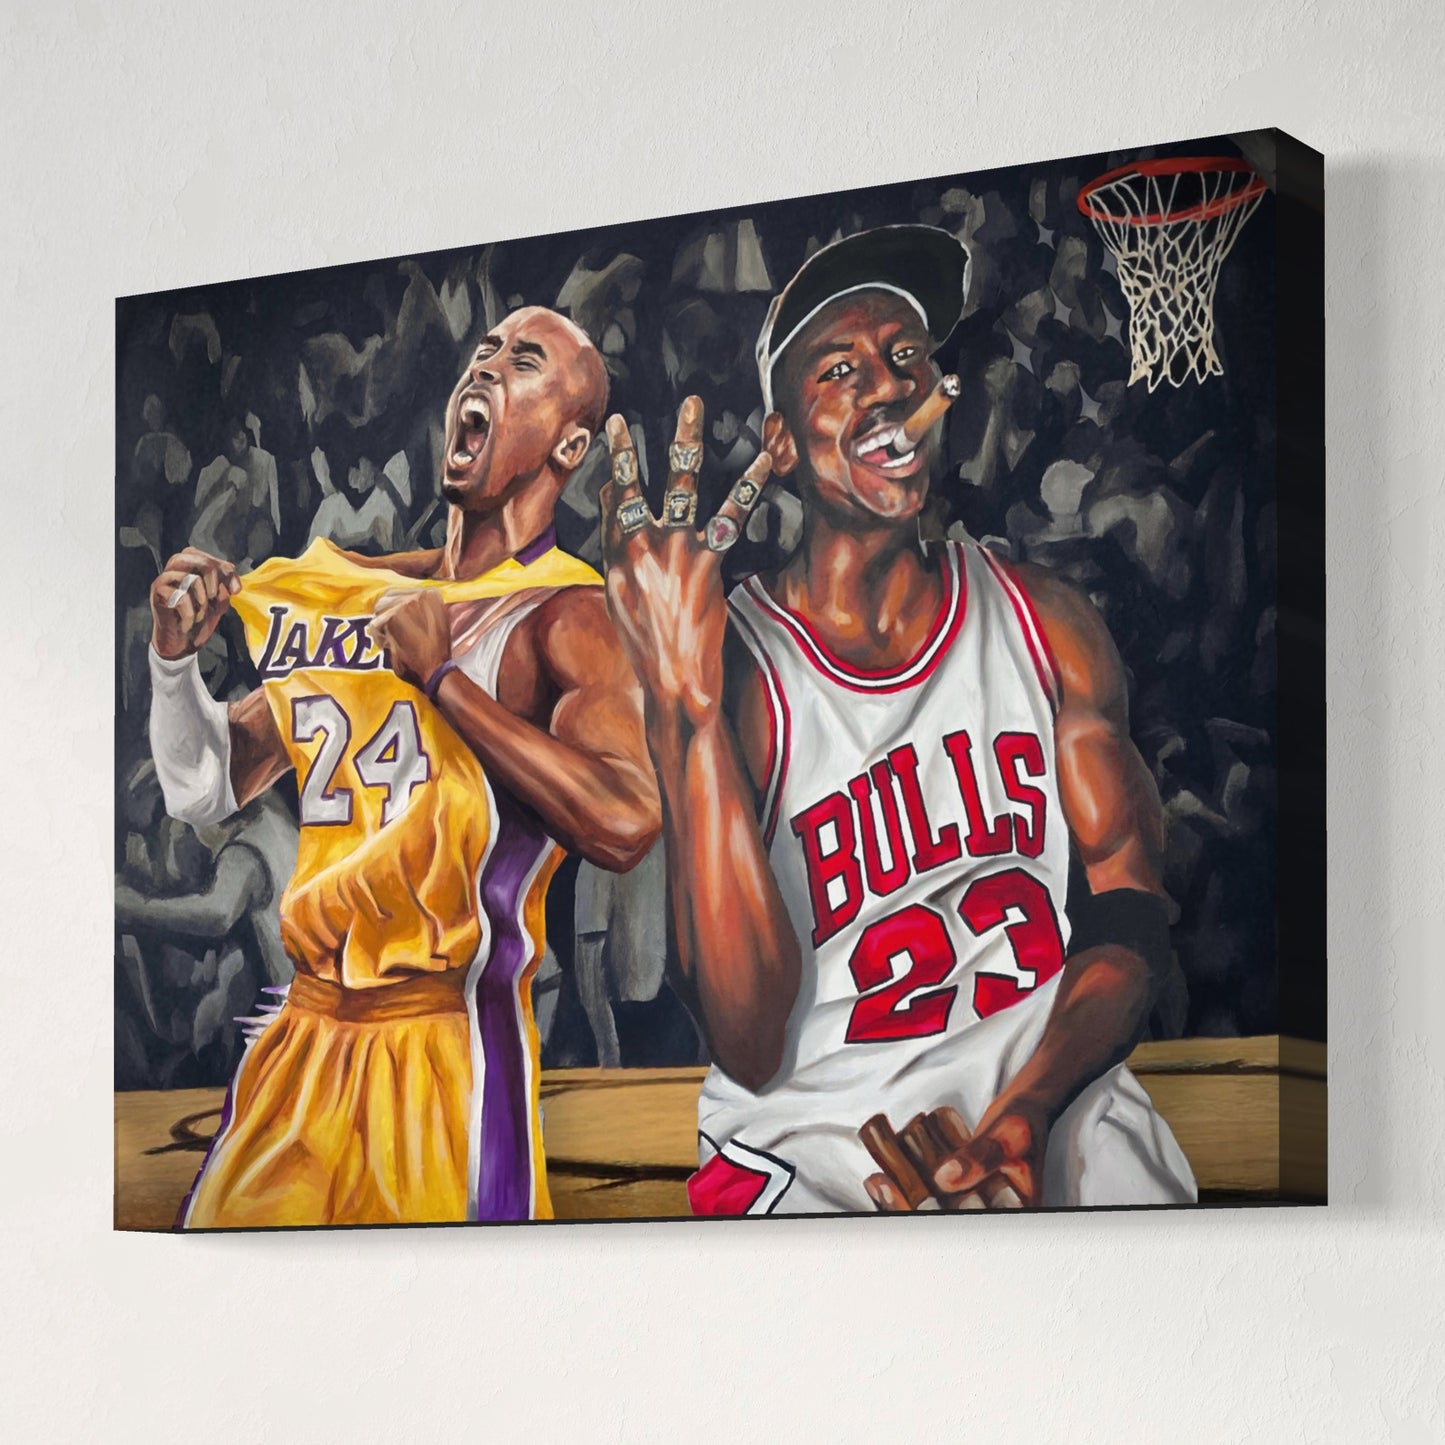 Kobe and Jordan - Canvas